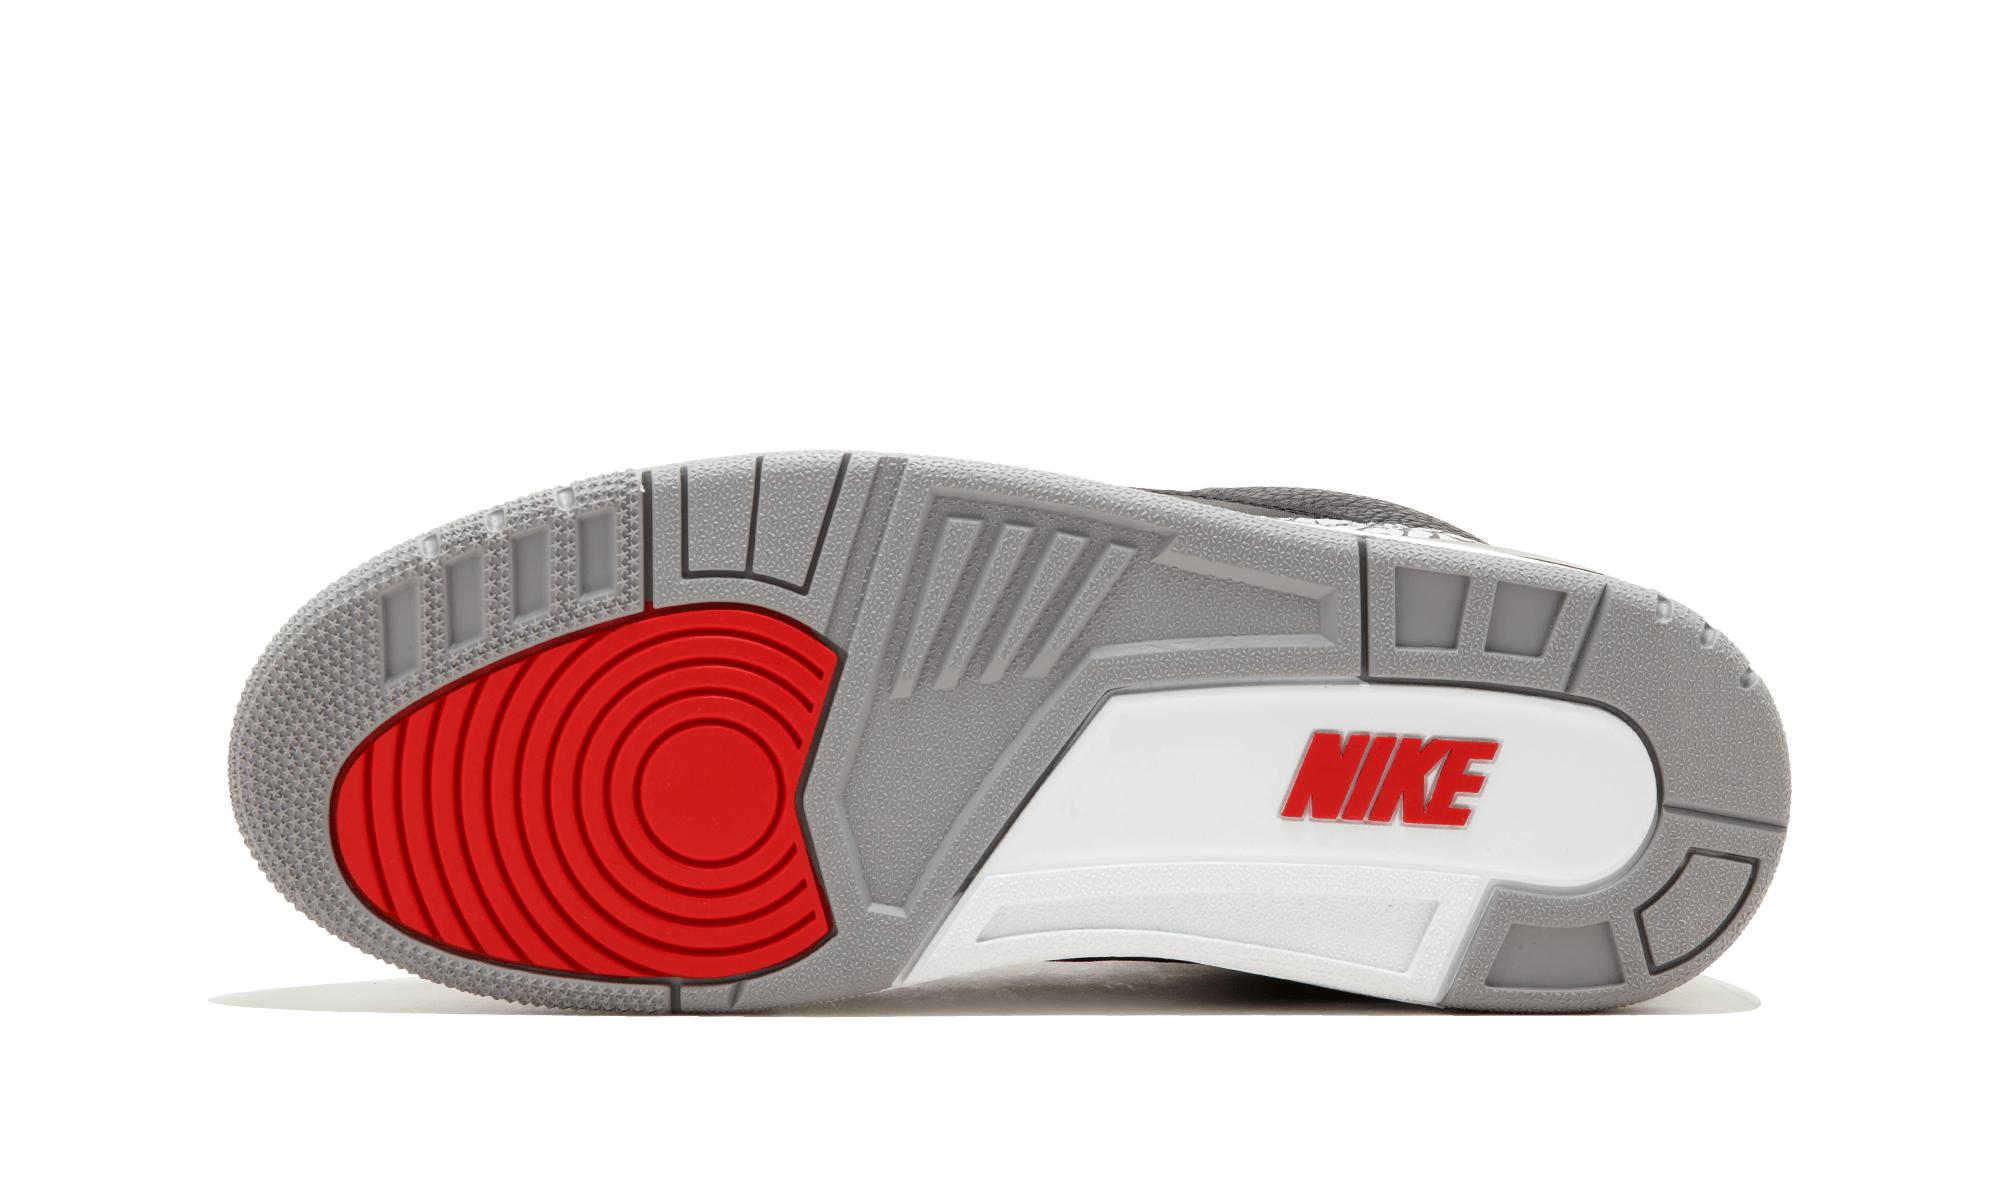 Lyst - Nike Air 3 Retro Sneakers in Black for Men - Save 78.75%